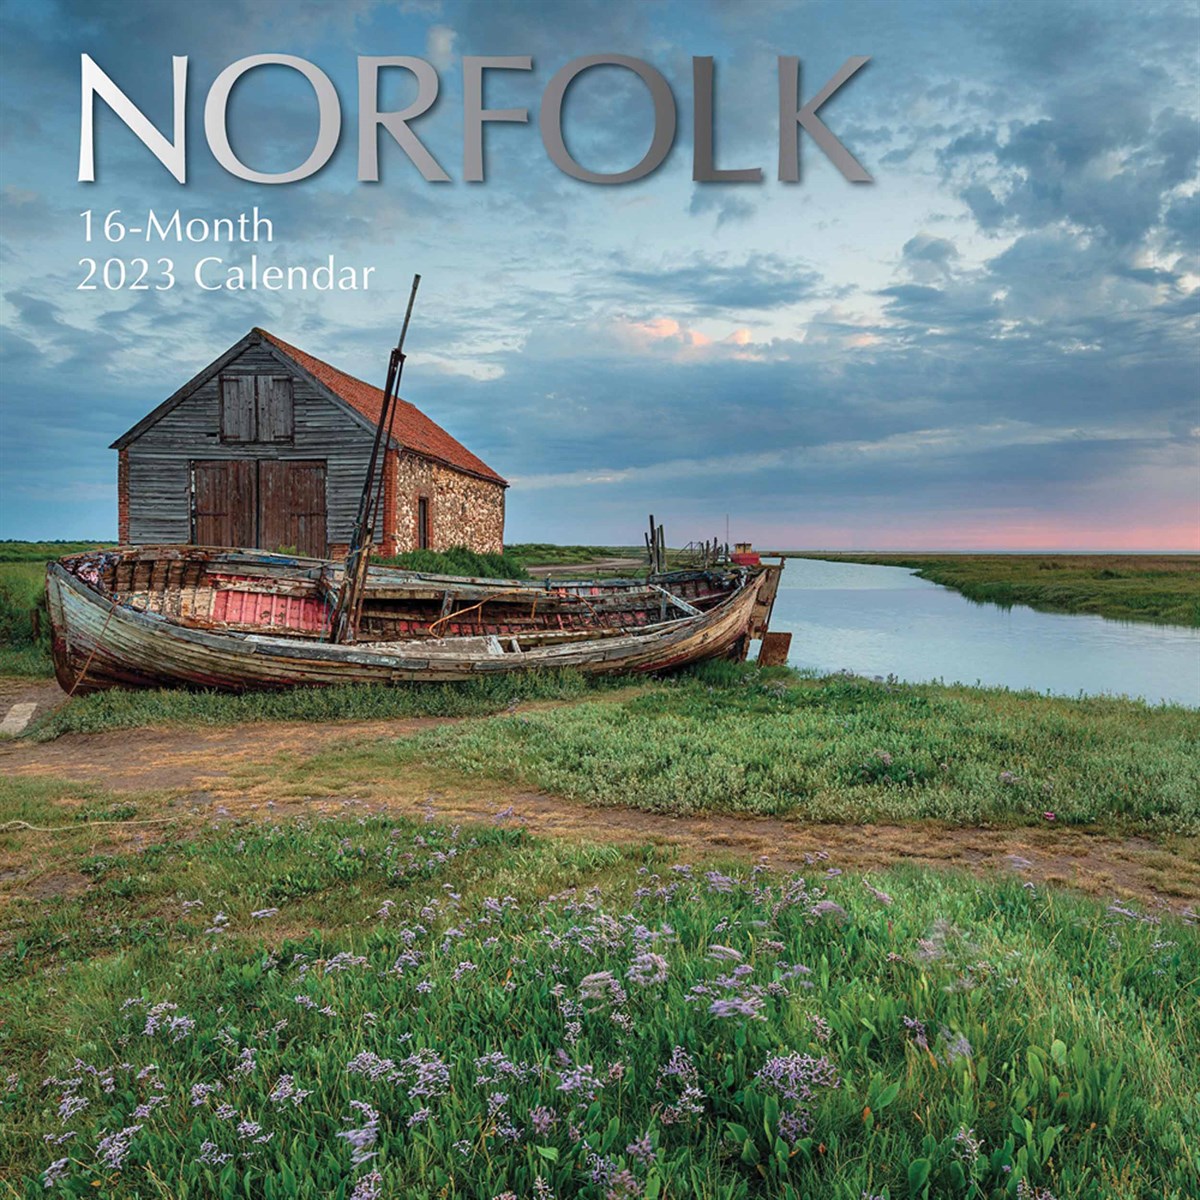 Norfolk 2023 Calendars